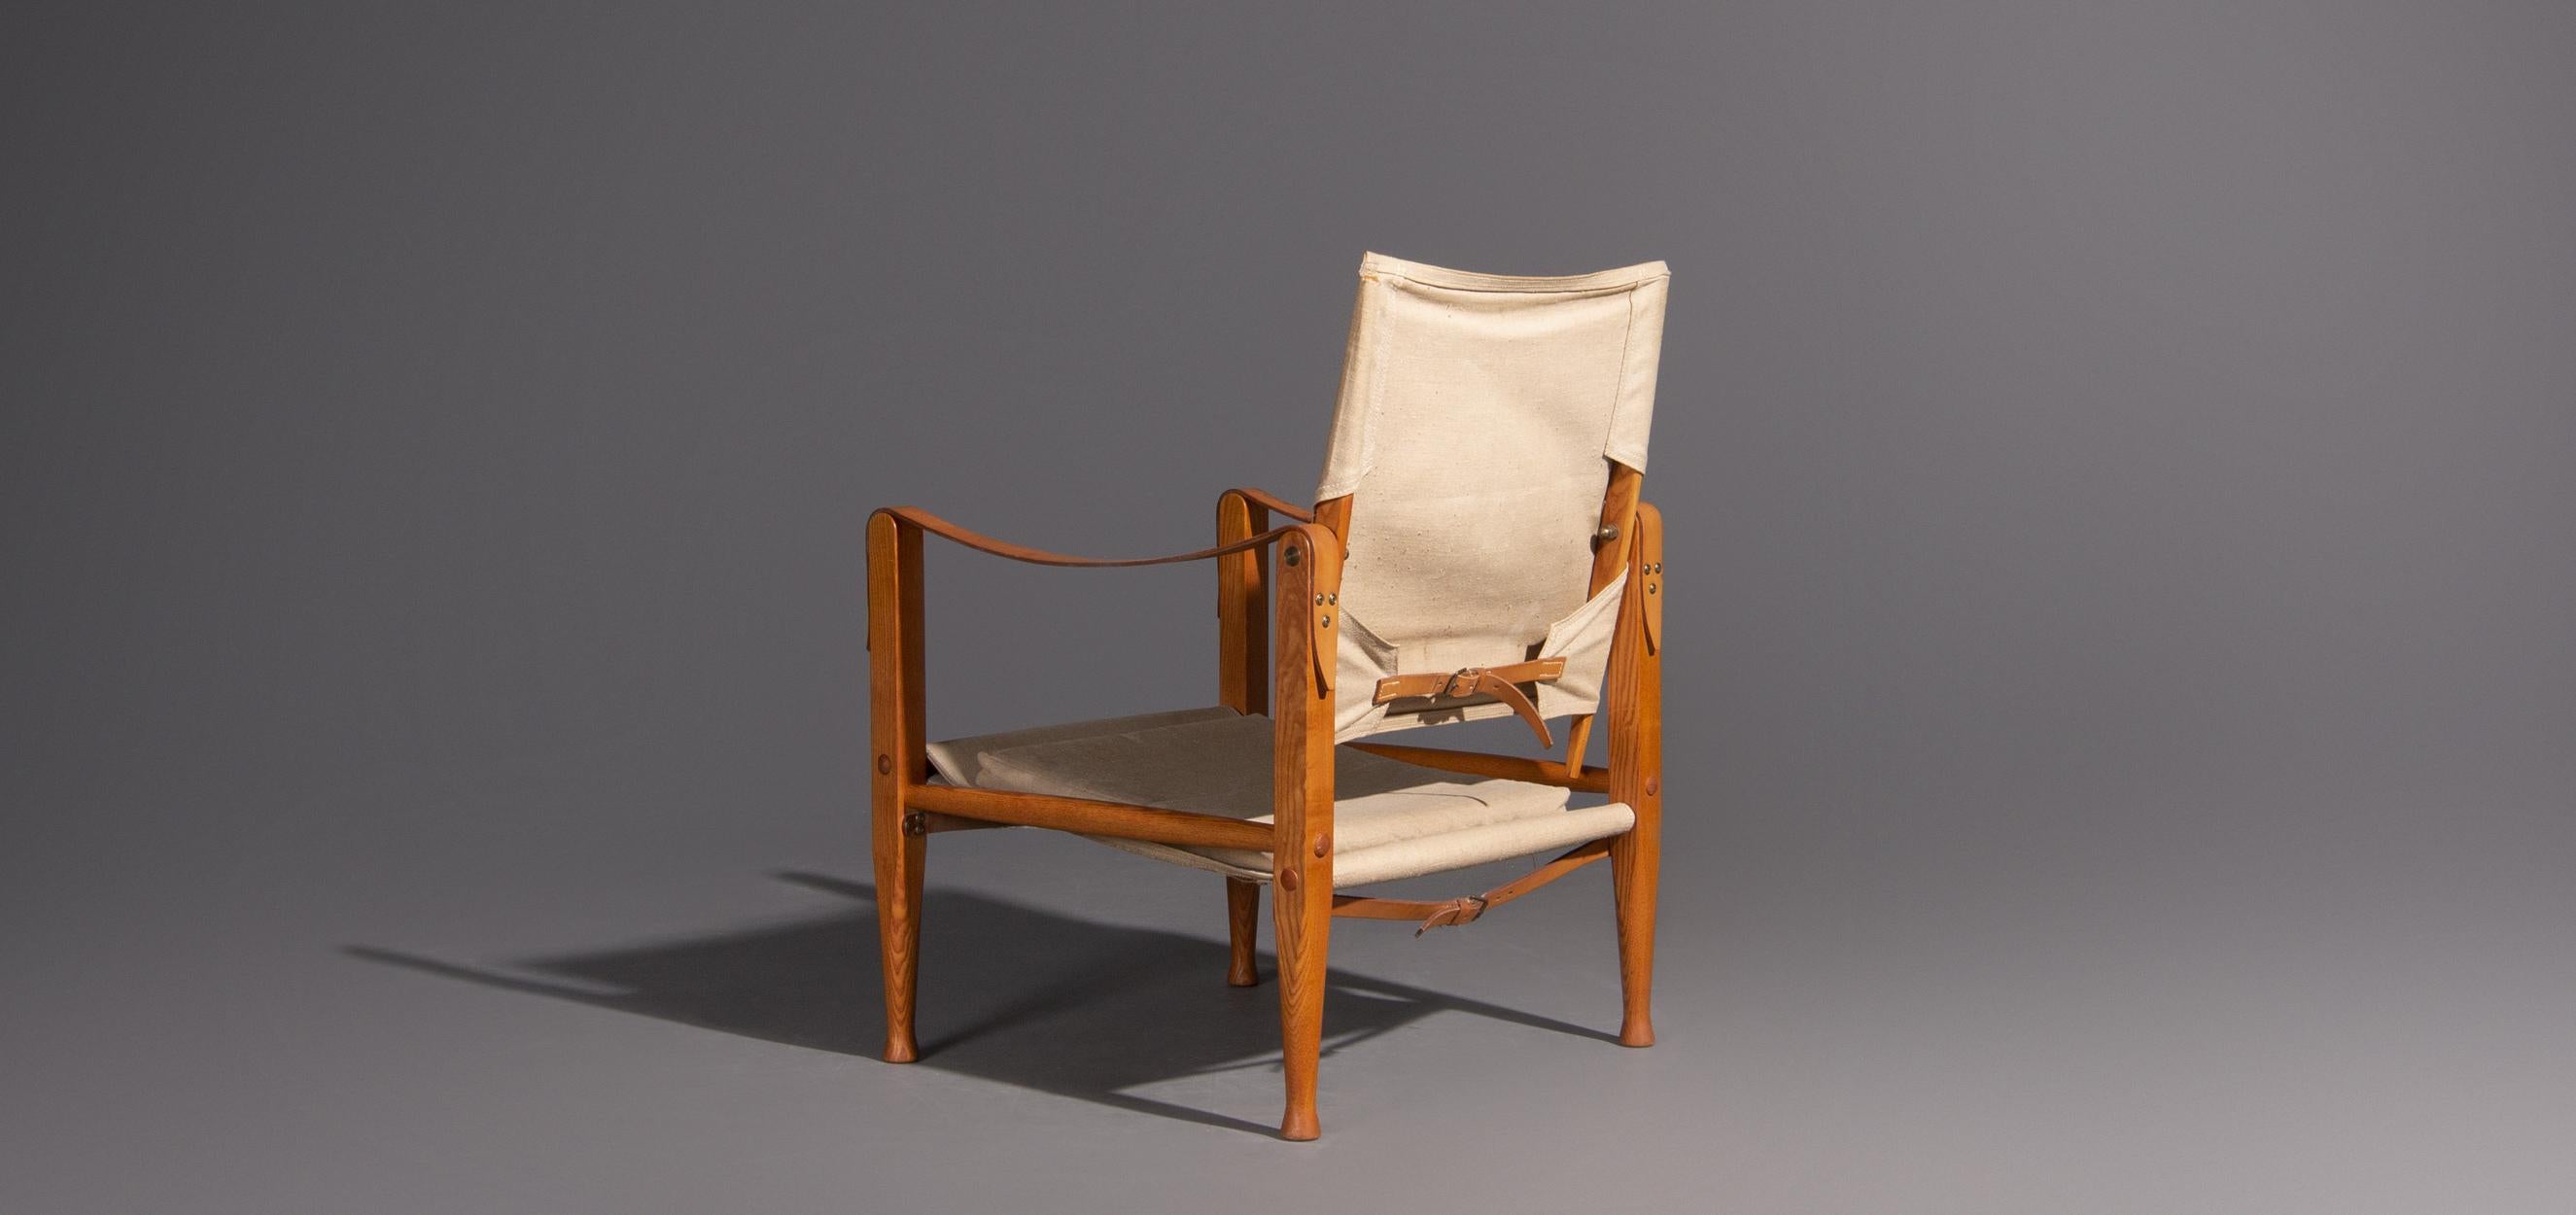 Scandinavian Modern Kaare Klint Safari Chair Produced by Rud Rasmussen, Denmark For Sale